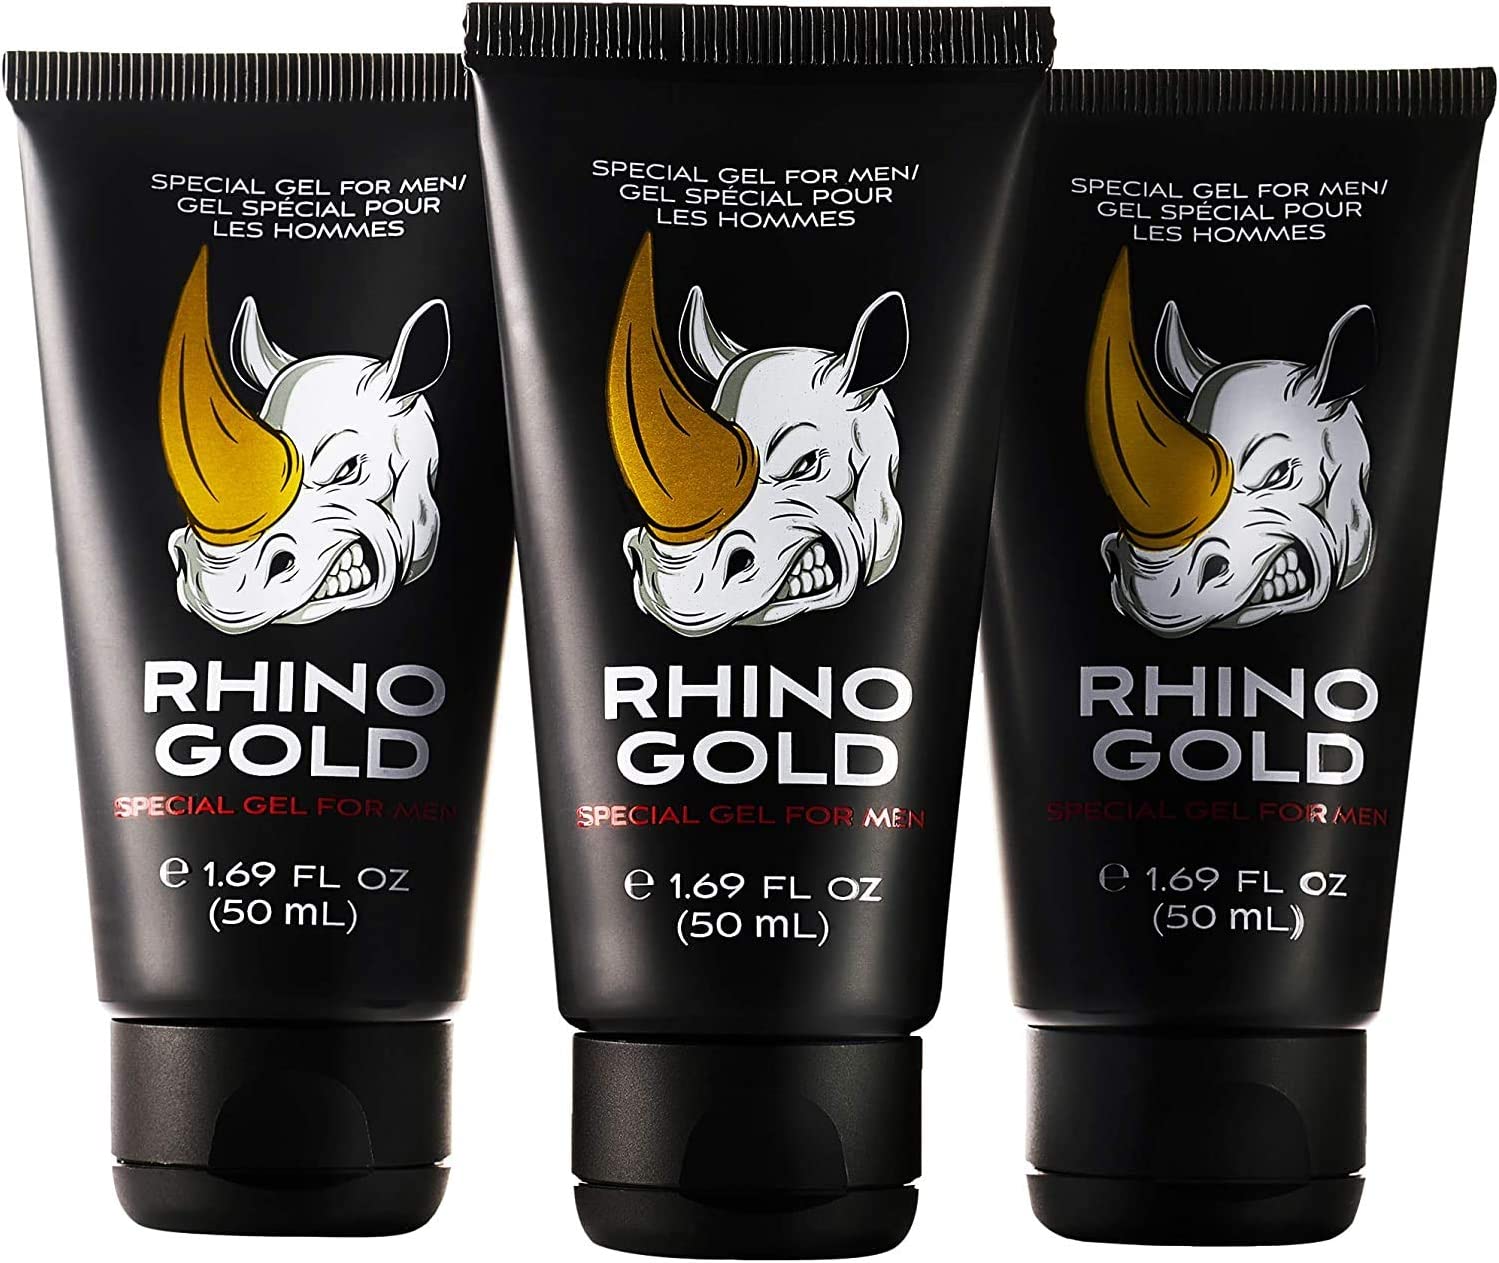 Rhino Gold Gel - achat - mode d'emploi - pas cher - comment utiliser